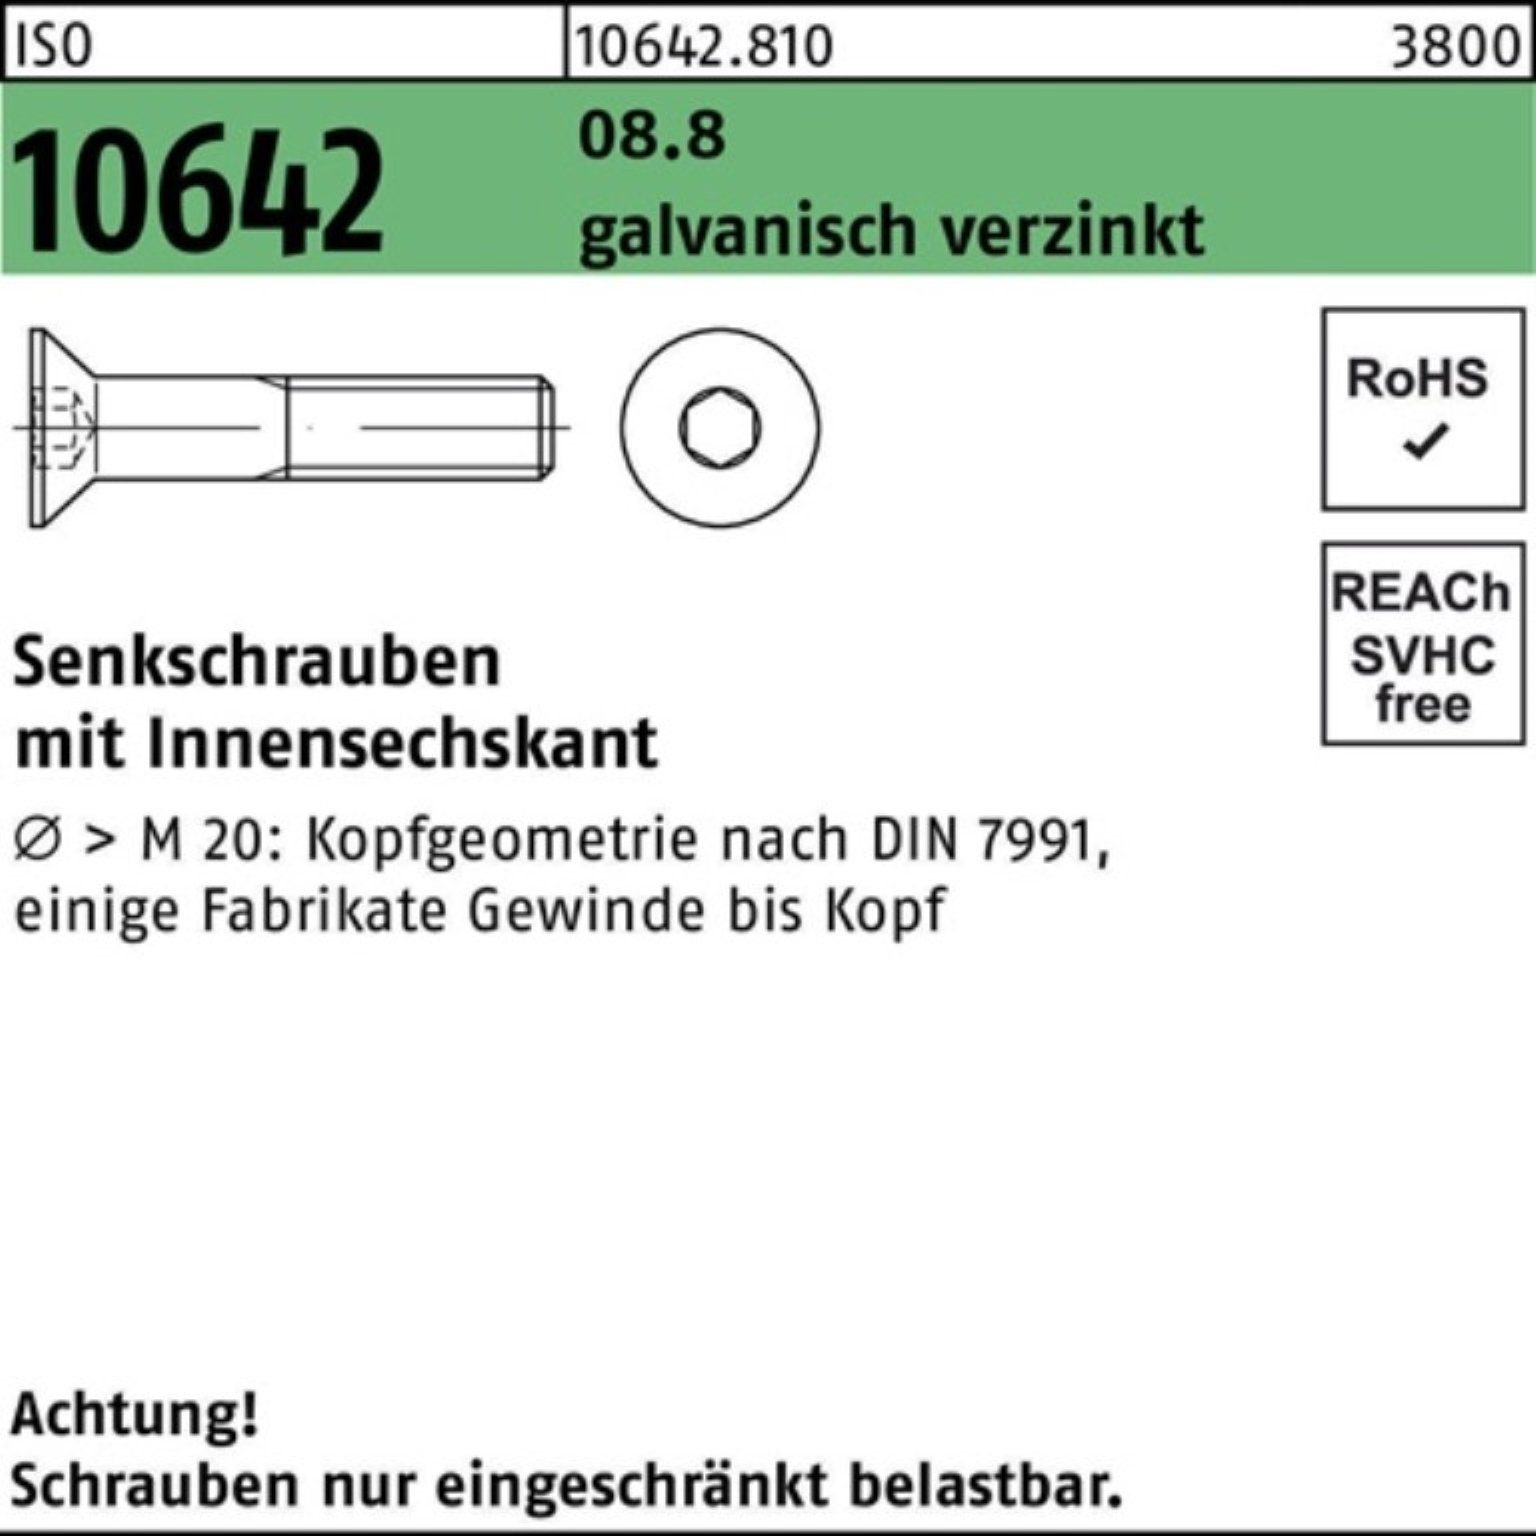 Senkschraube Reyher 10642 55 ISO galv.verz. Senkschraube Innen-6kt 100er M14x Pack 8.8 50